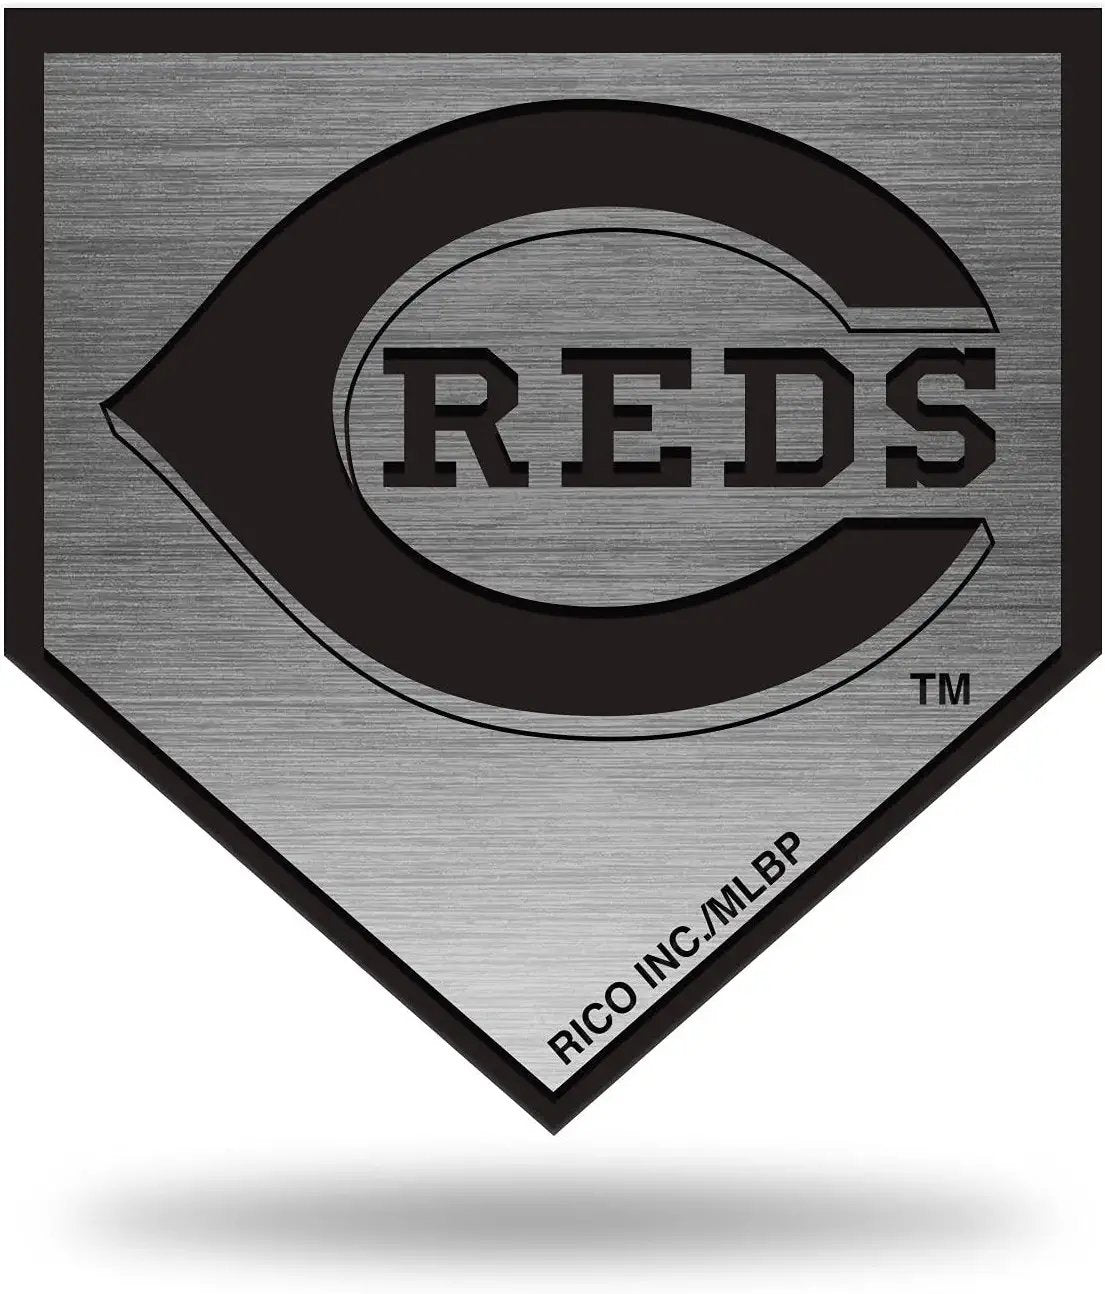 Cincinnati Reds Solid Metal Auto Emblem, Silver Chrome Color, Antique Nickel Design, Raised, 3.5 Inch, Adhesive Tape Backing